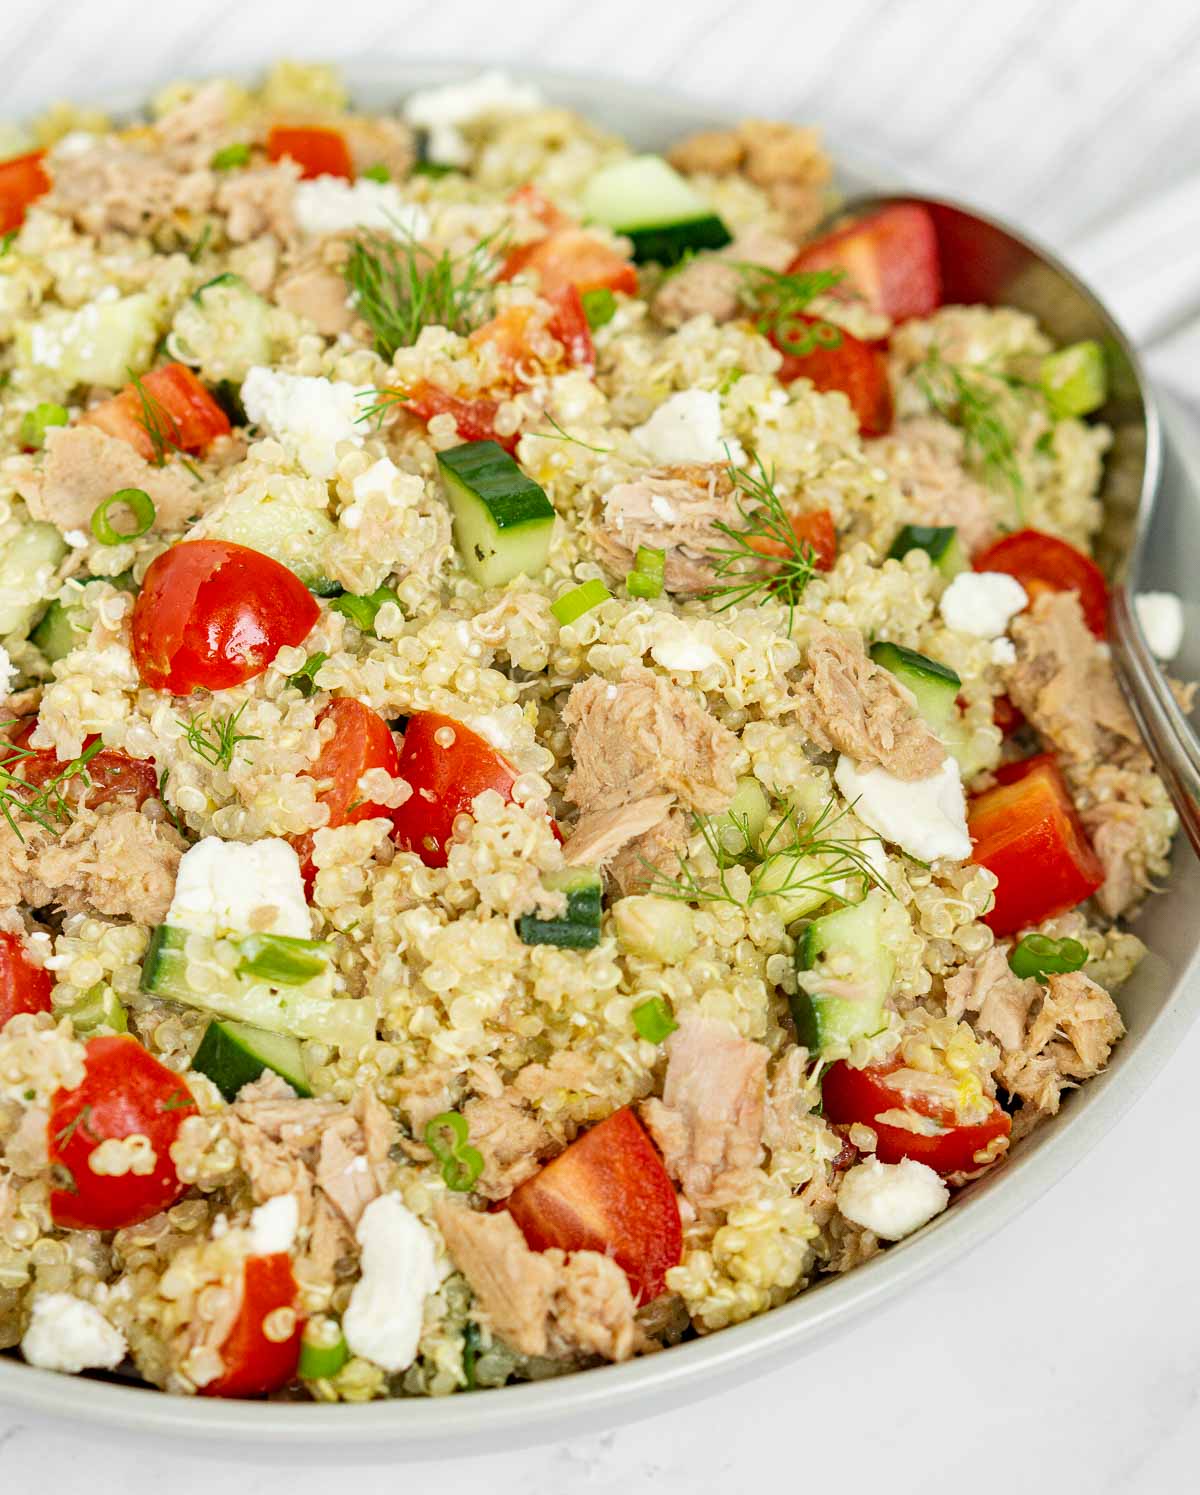 Bowl of quinoa tuna salad with veggies and feta.